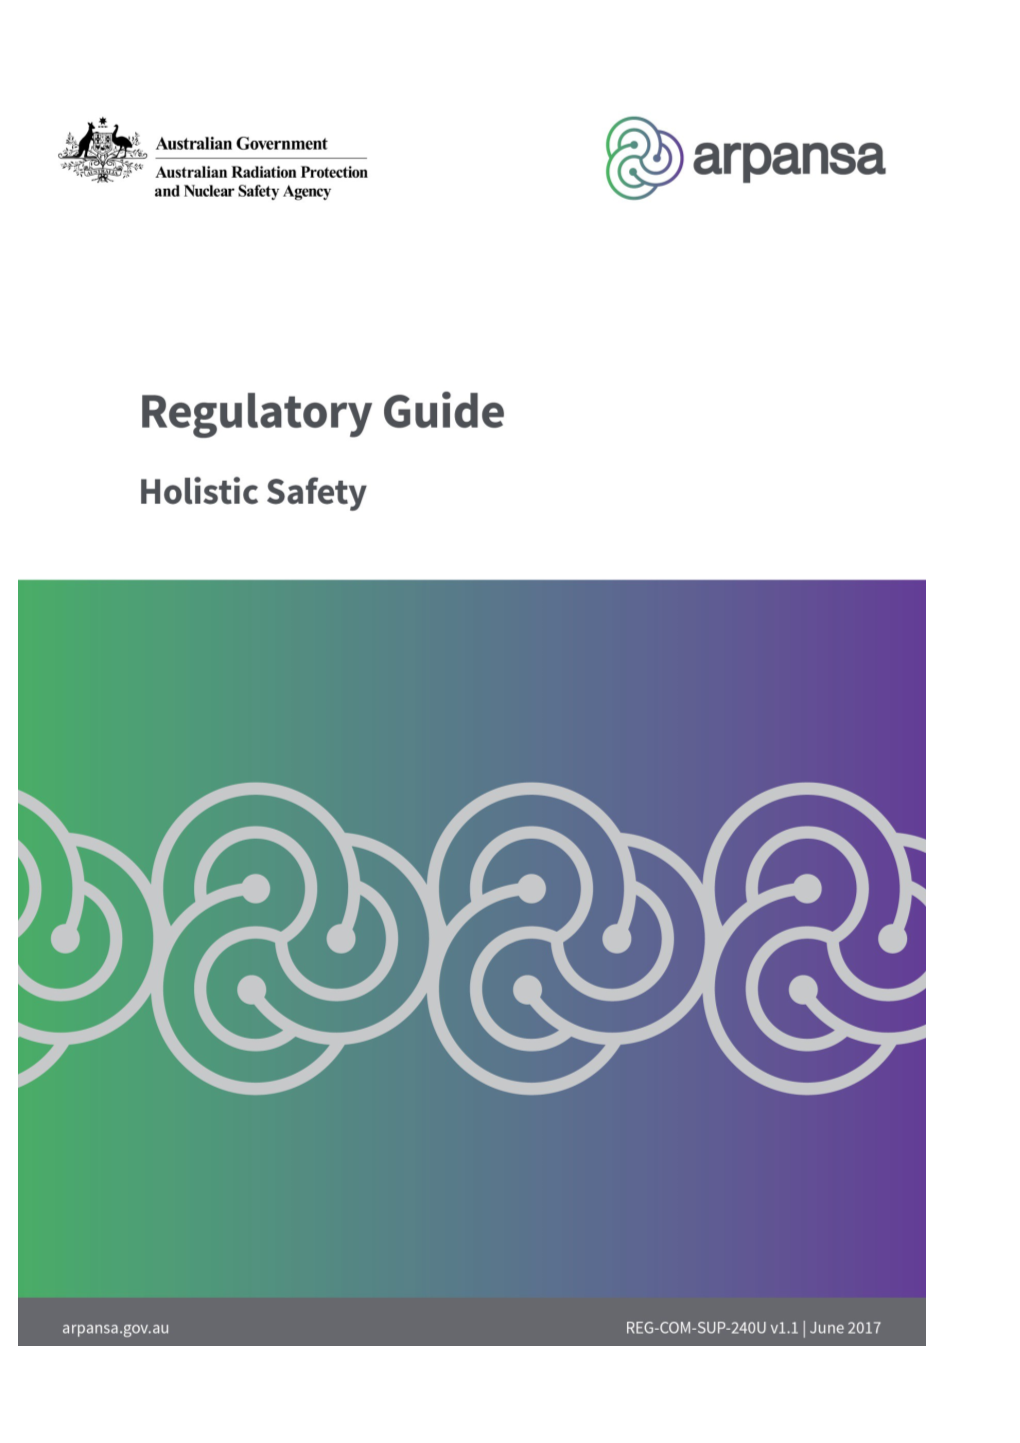 Regulatory Guide: Holistic Safety